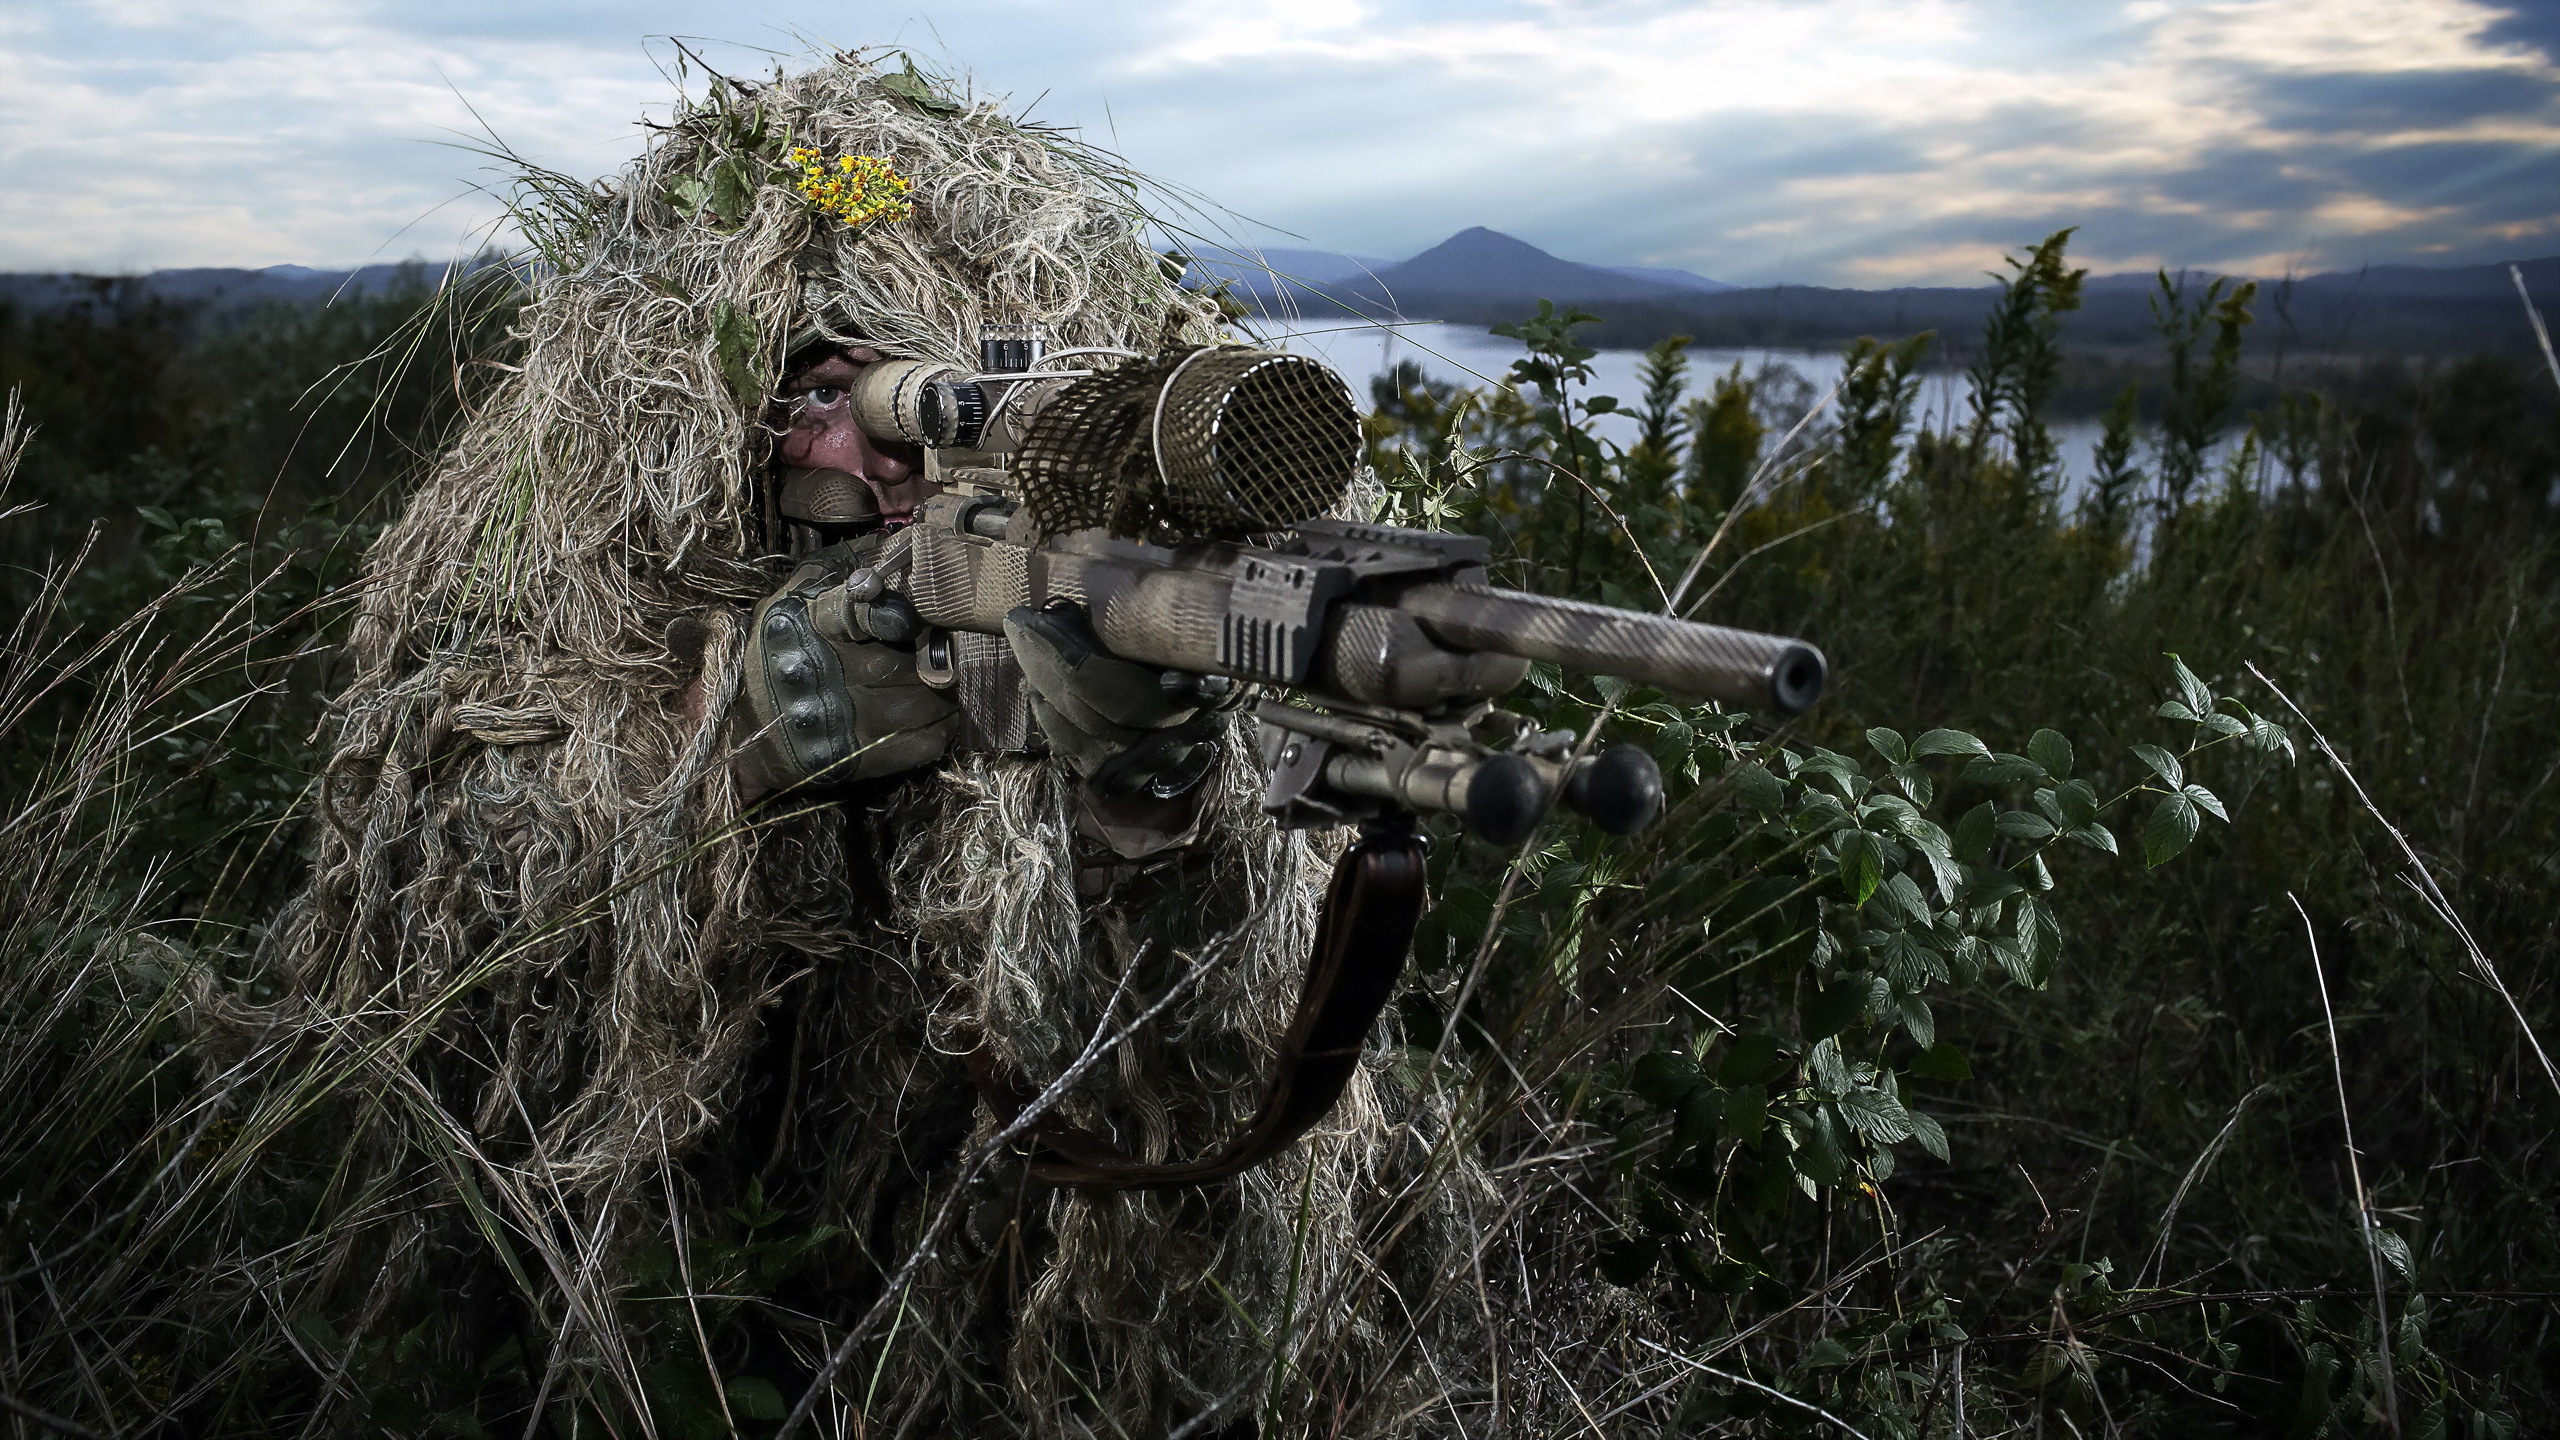 Sniper rifle soldier weapon gun military d wallpaper 2560x1440 2560x1440